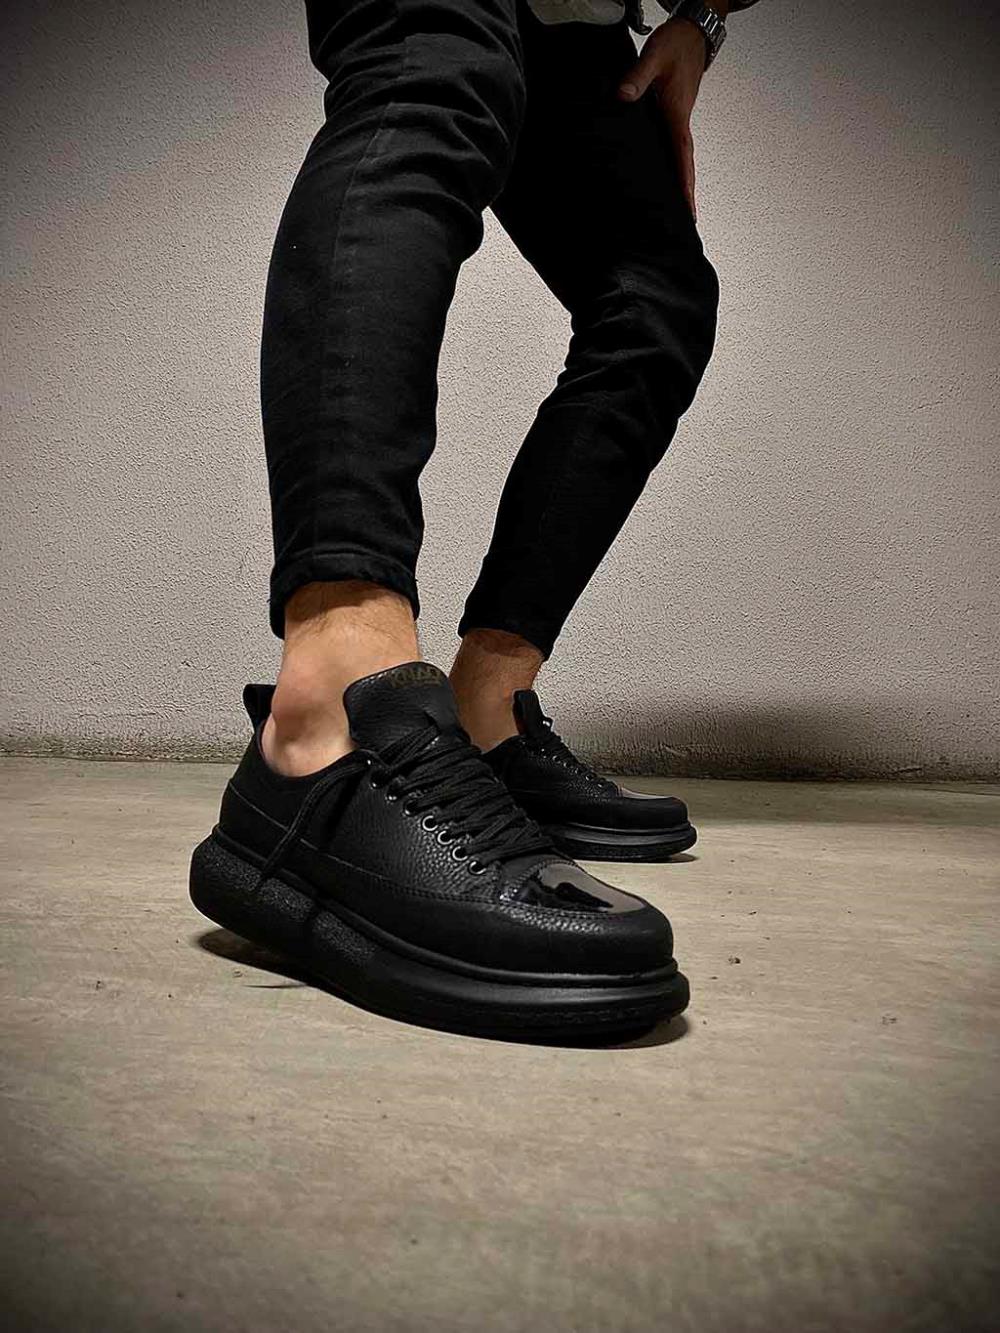 Knack Sneakers Ayakkabı 813 Siyah (Siyah Taban) m9232